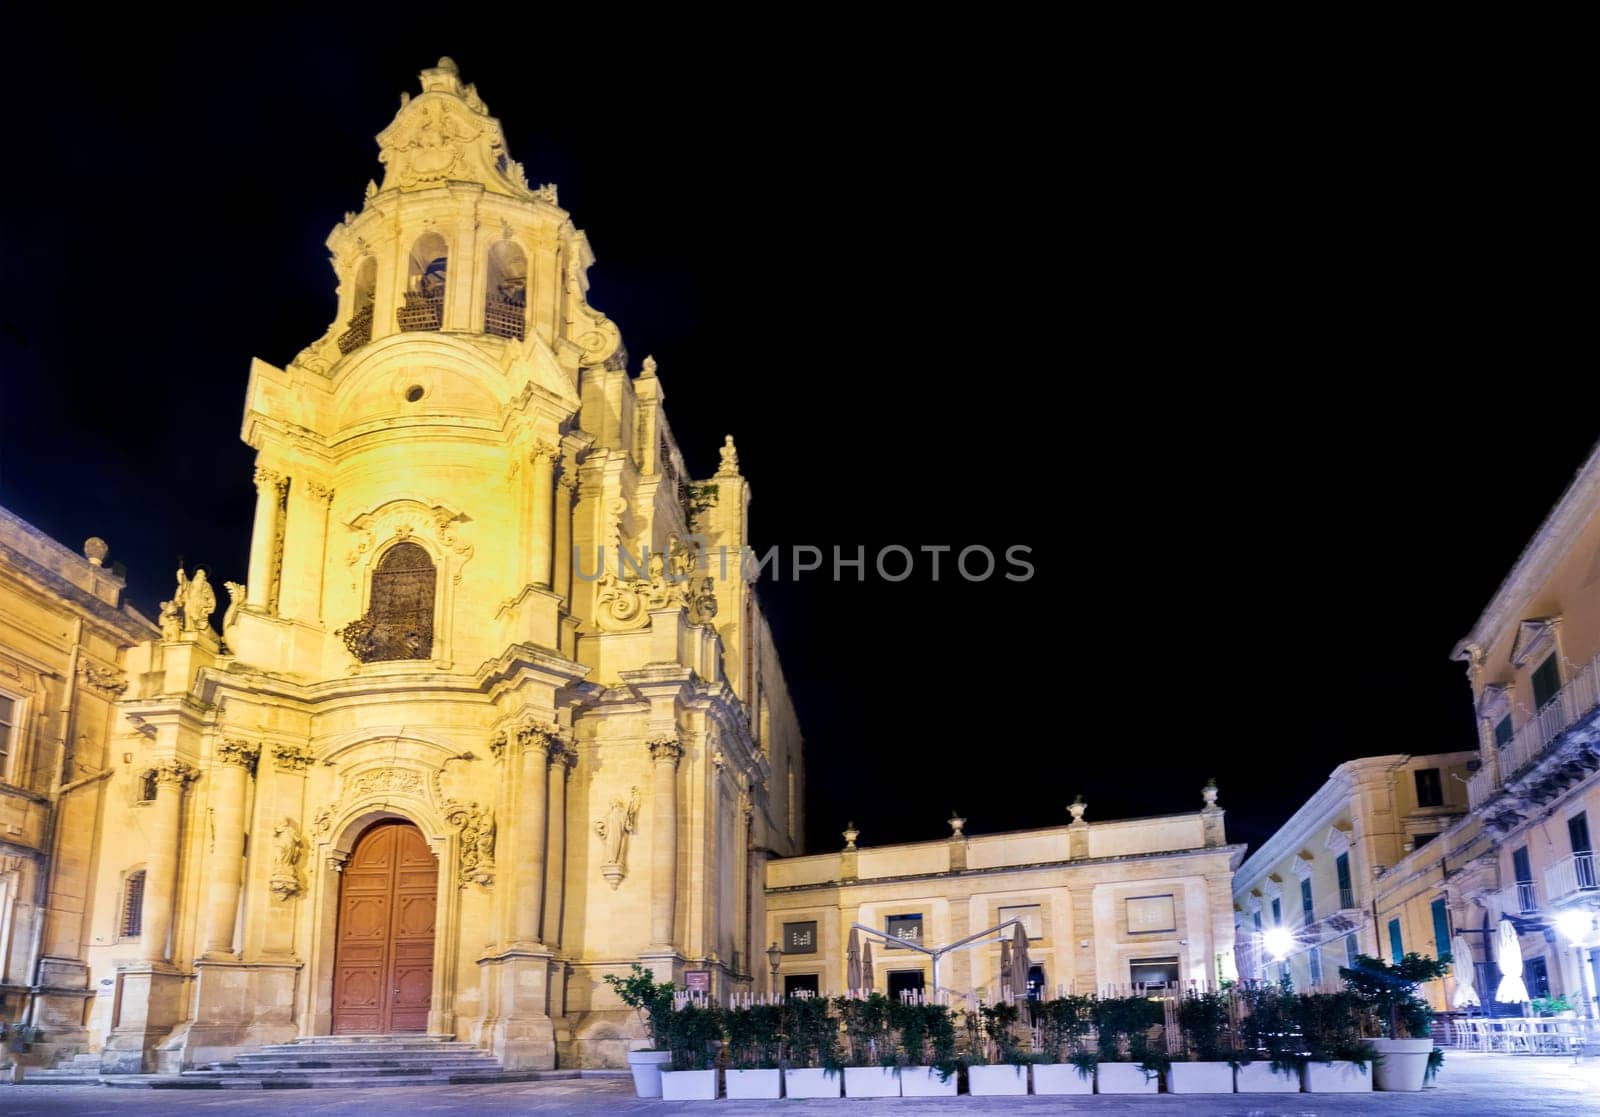 Church of Saint Joseph (Chiesa di San Giuseppe) in Ragusa, Sicily, Italy at night by EdVal